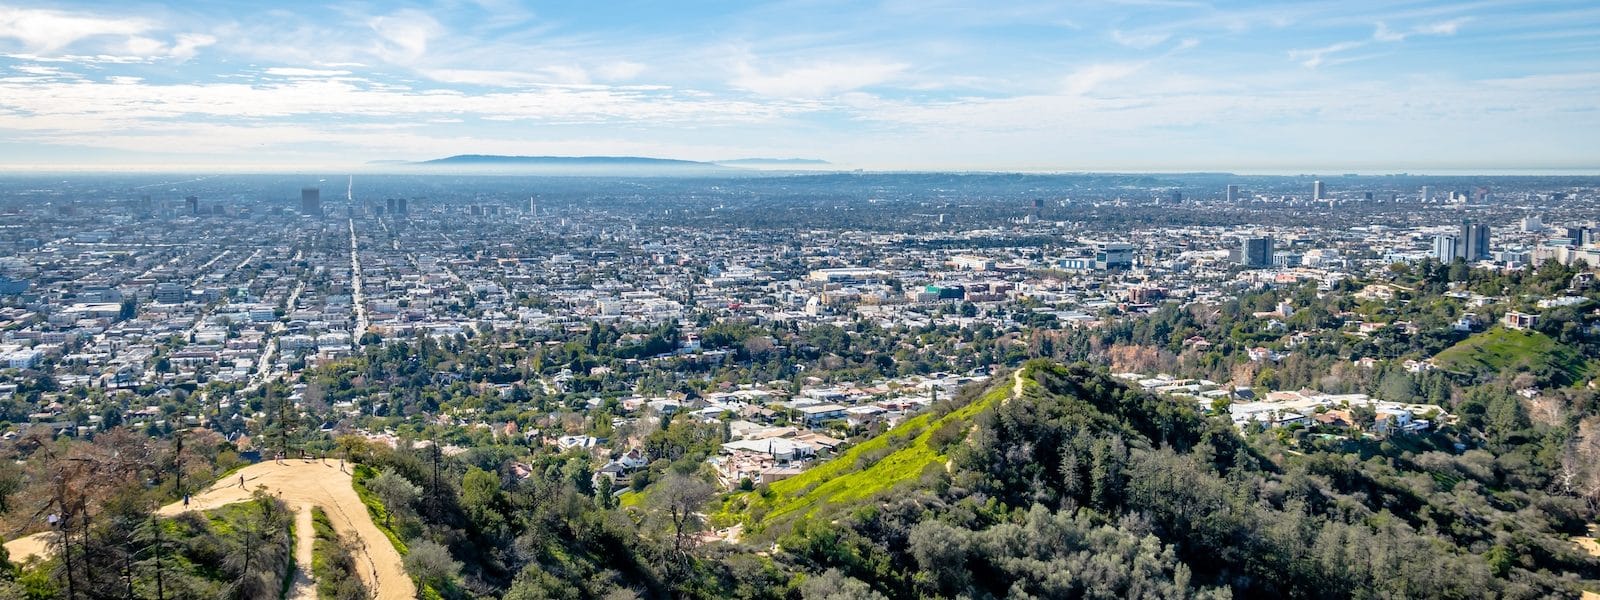 Neighborhoods of Greater Los Angeles